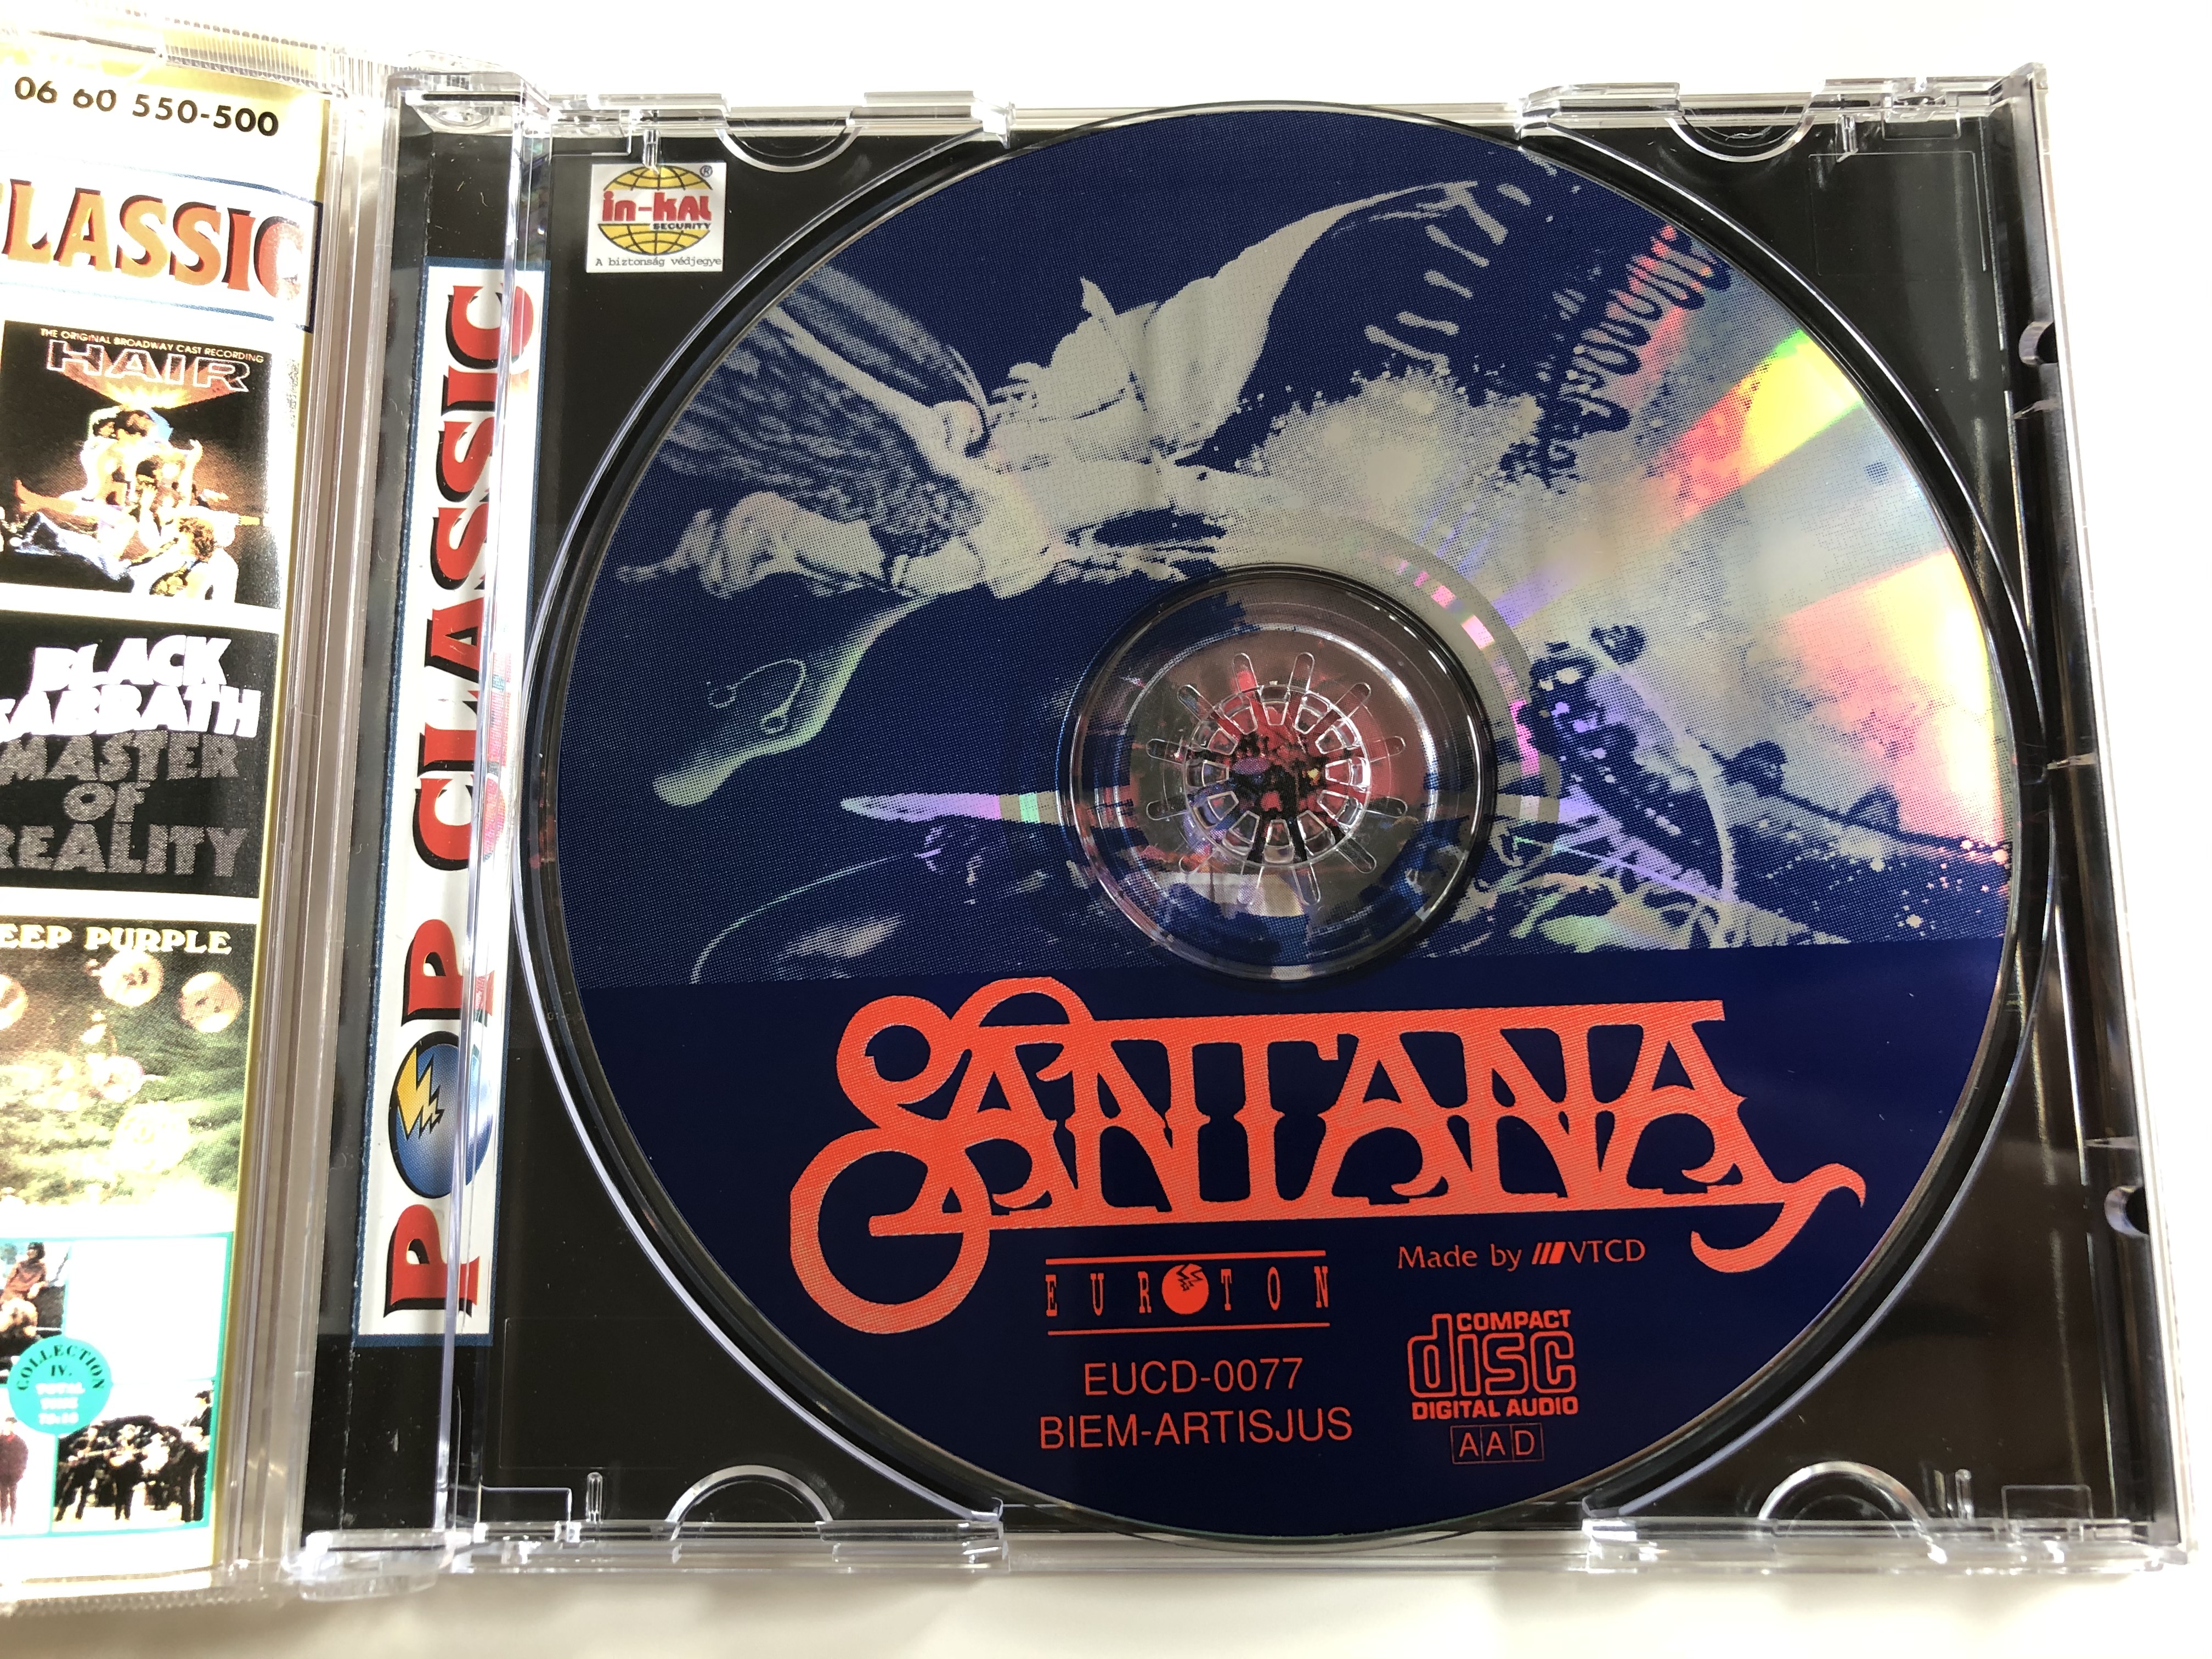 santana-best-of-pop-classic-total-time-7402-euroton-audio-cd-eucd-0077-2-.jpg